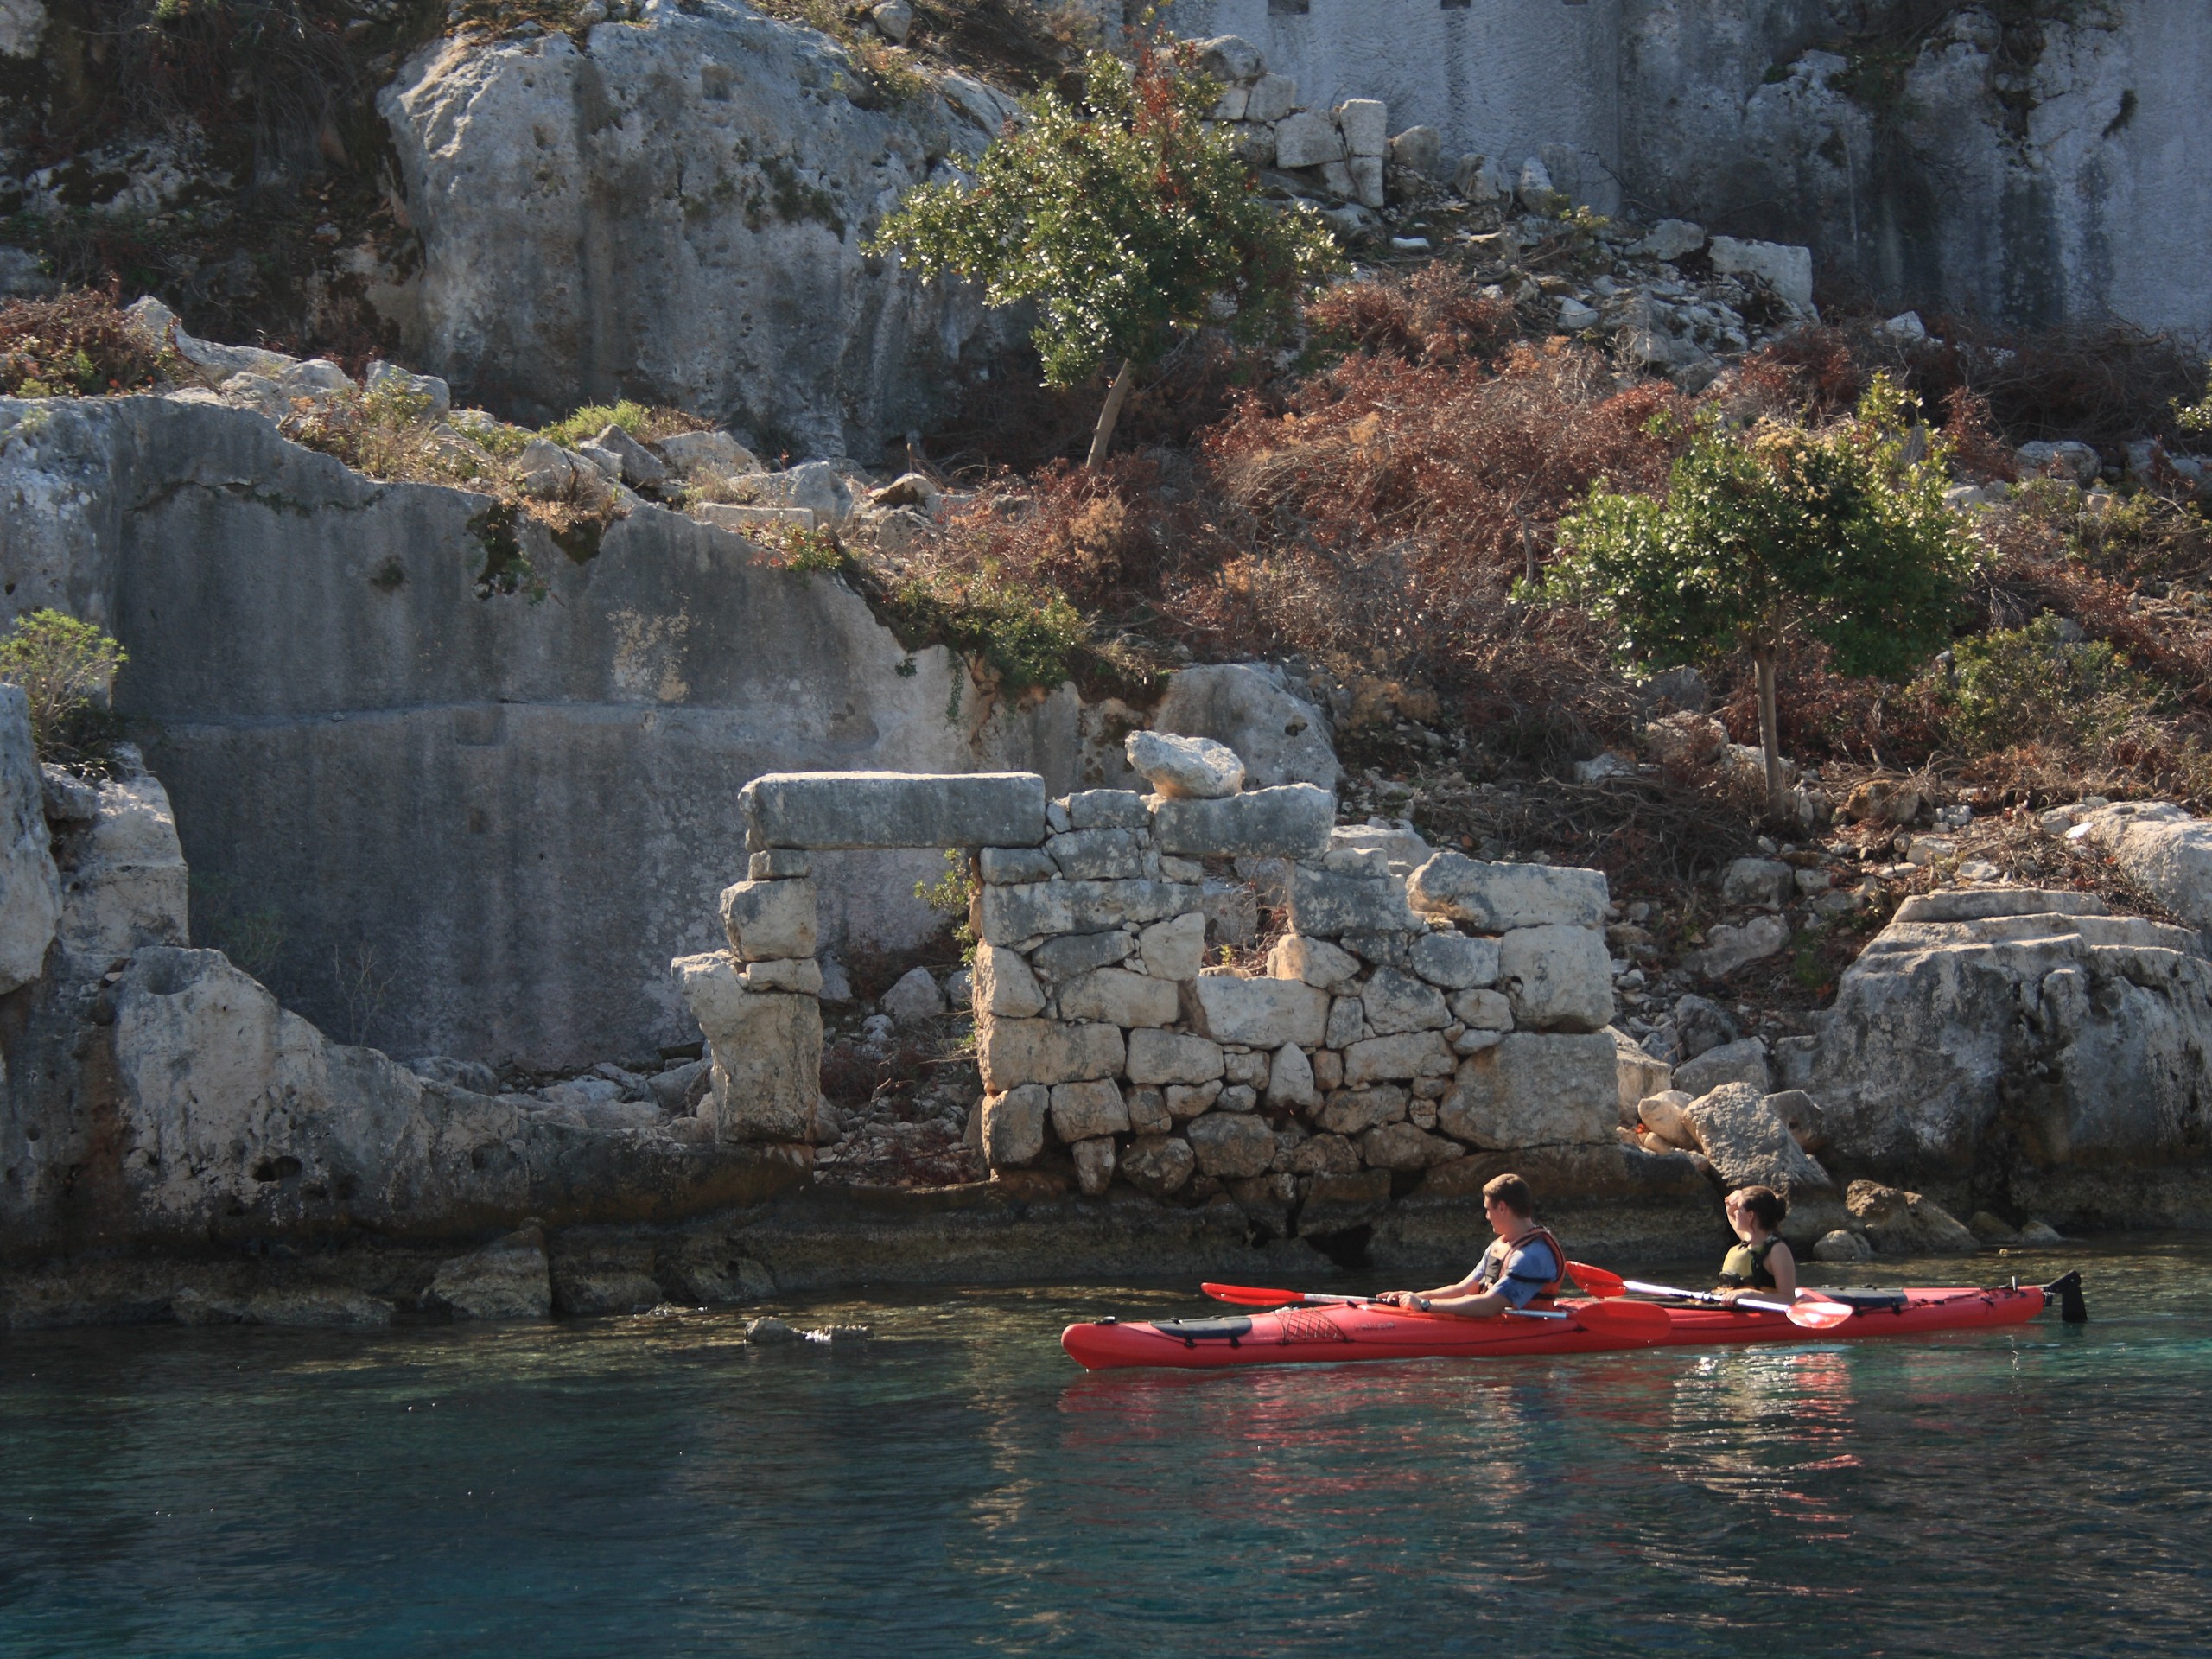 Kayakers observing the Kekova Island ruins in Turkey